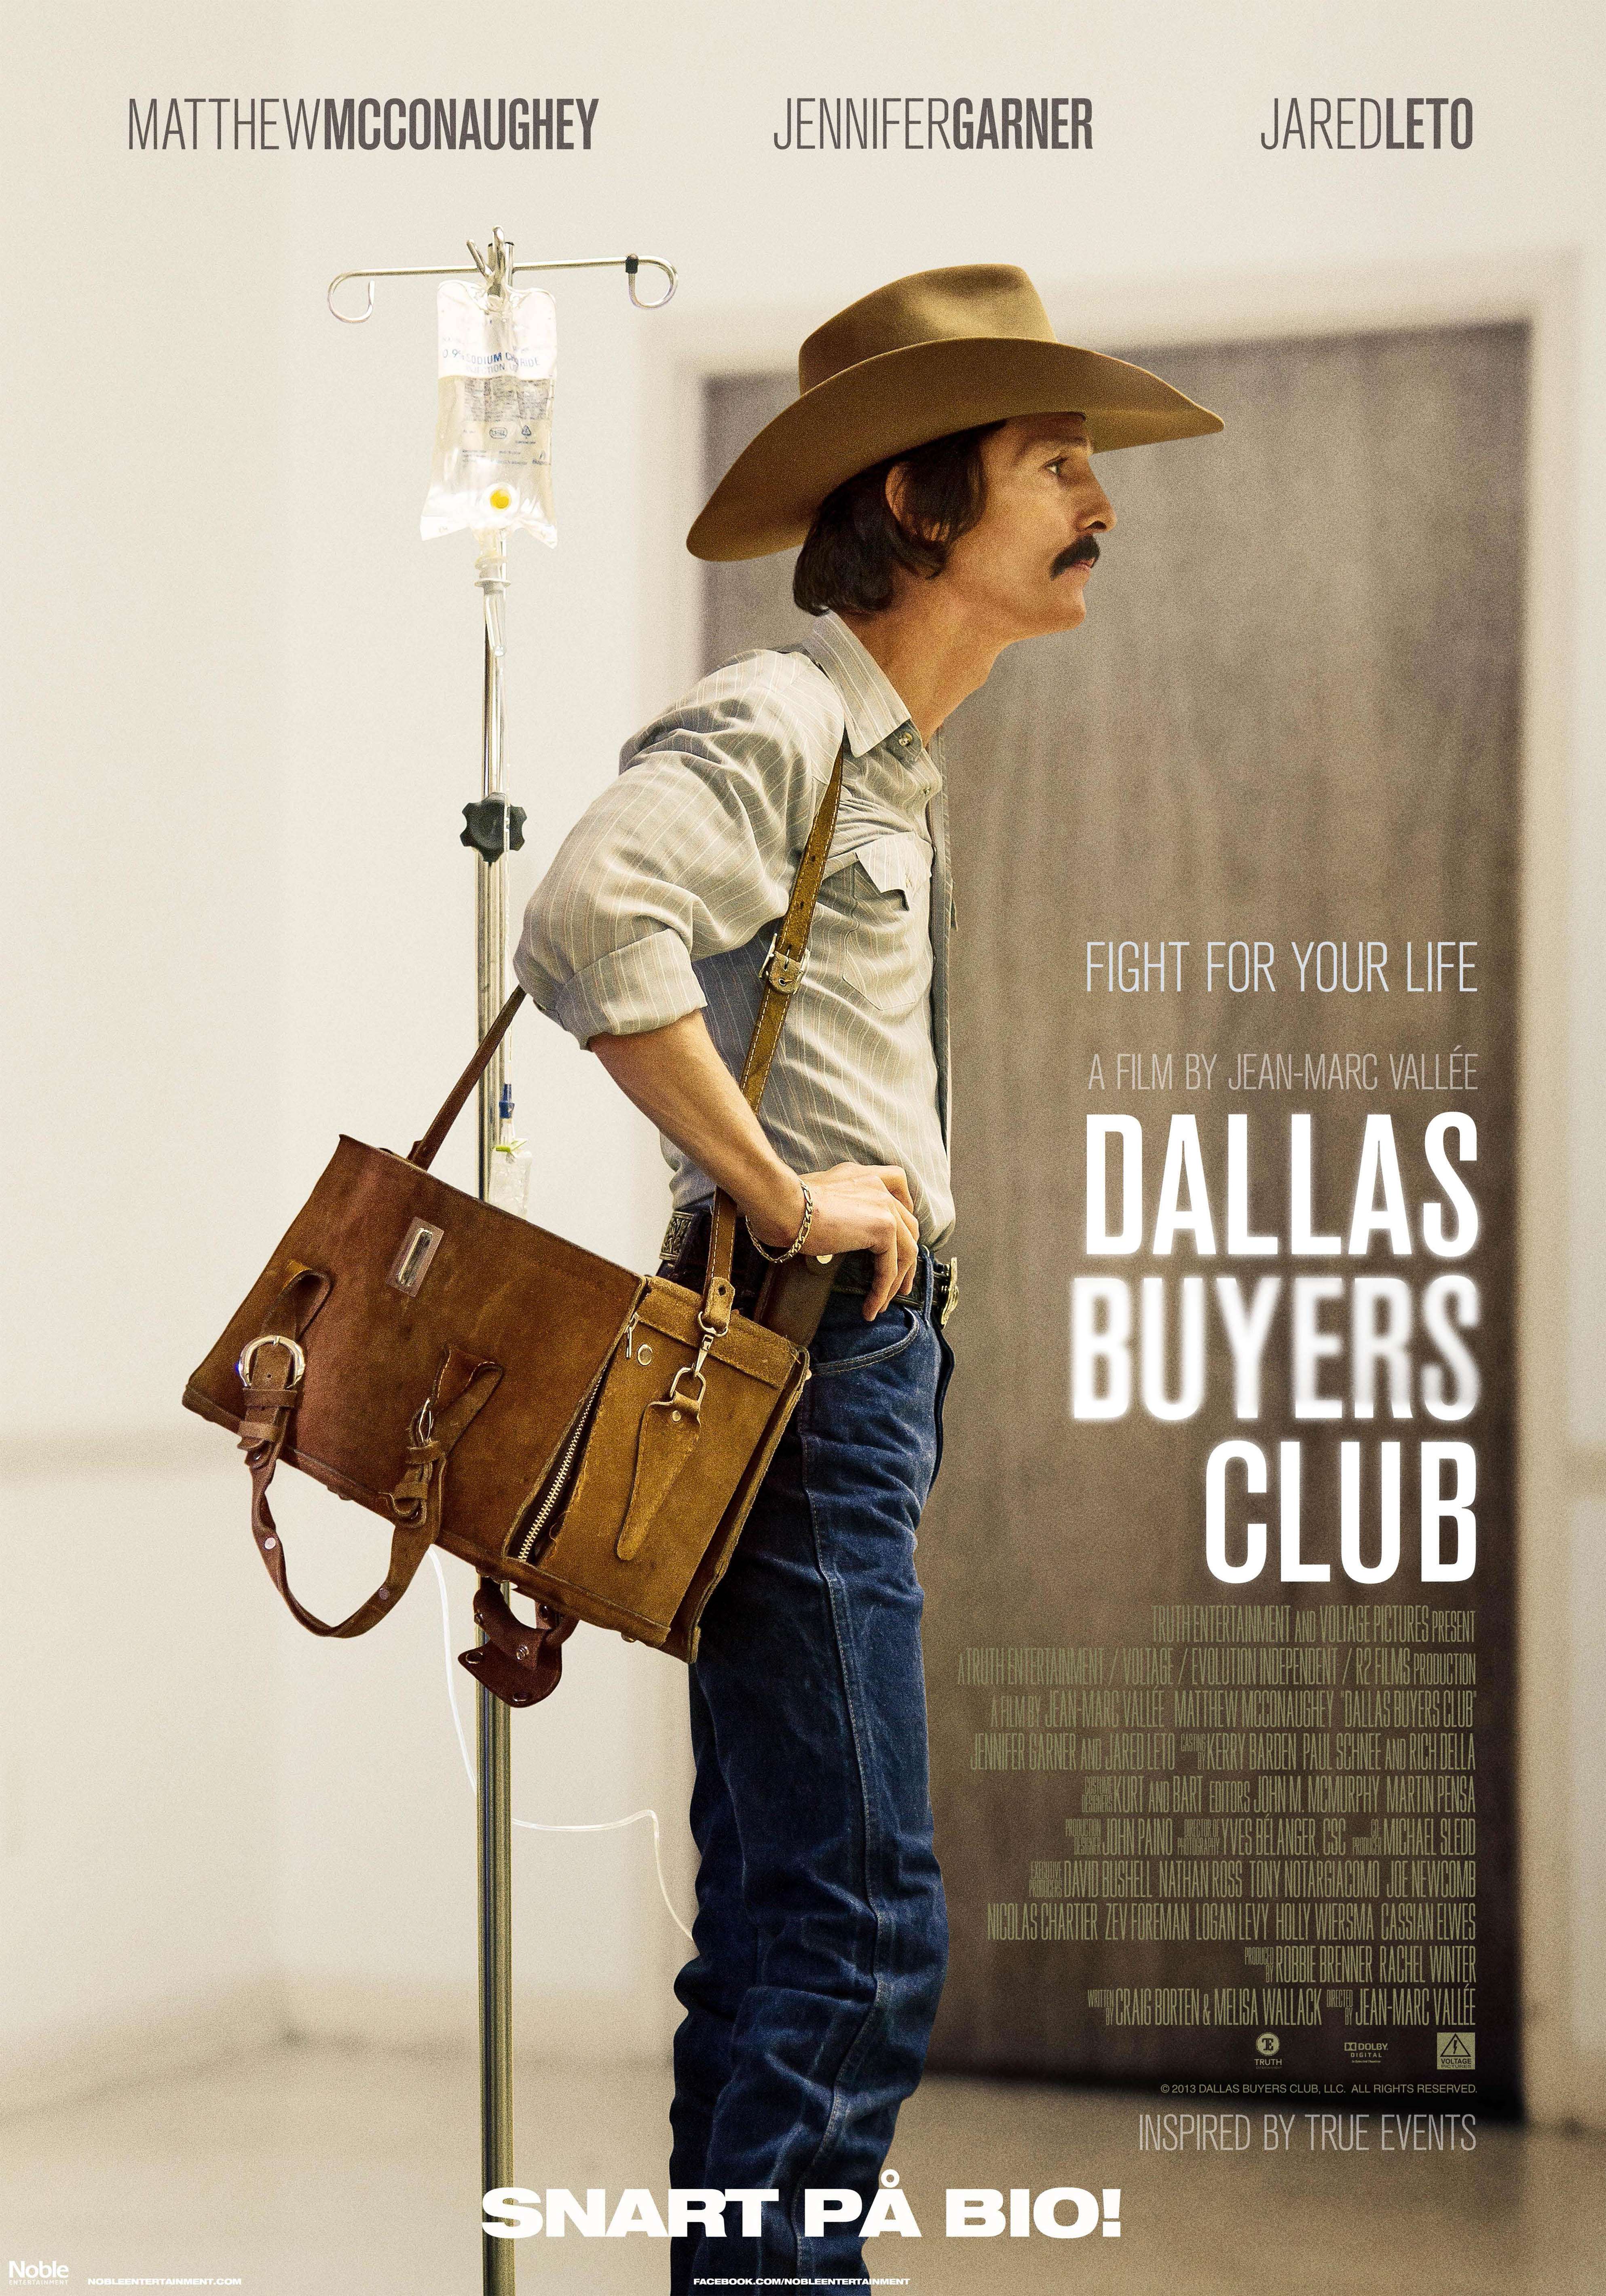 Далласский клуб покупателей трейлер. Далласский клуб покупателей Dallas buyers Club, 2013. Мэттью Макконахи Далласский клуб покупателей 2013. Dallas buyers Club poster.